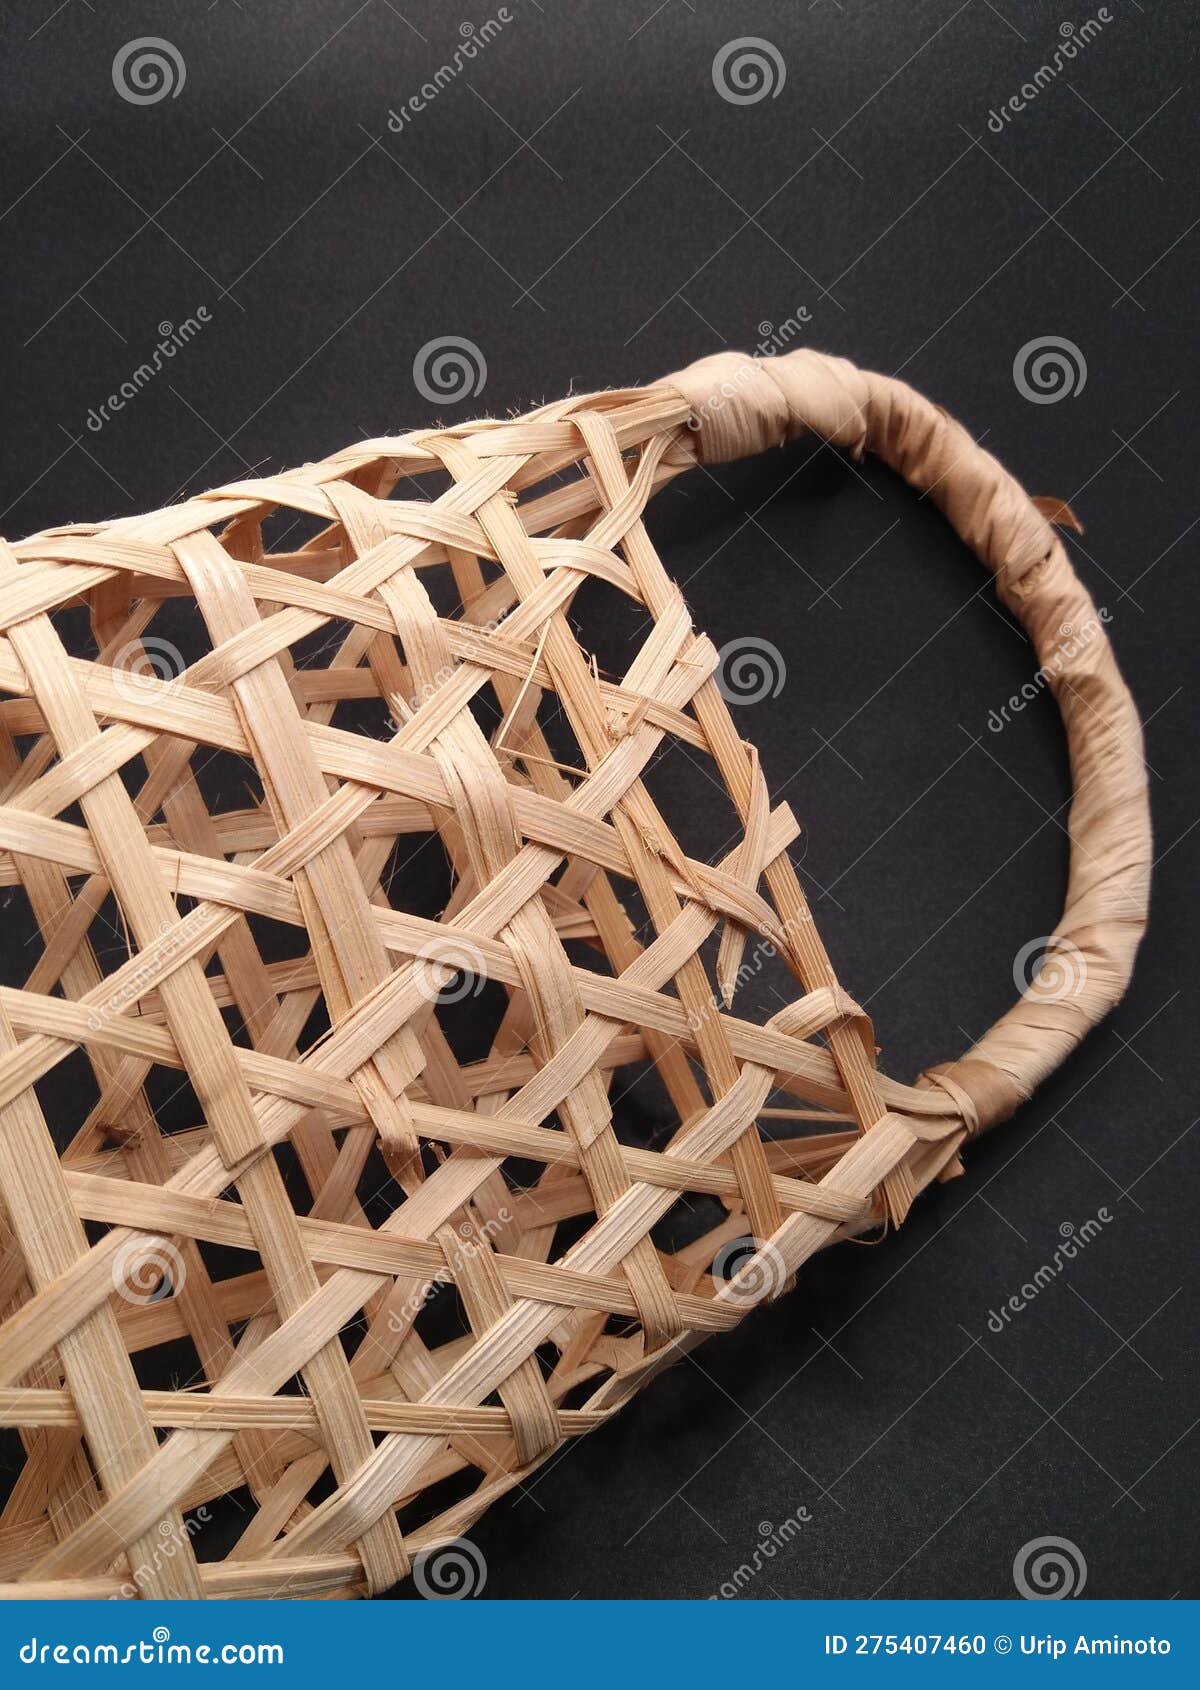 https://thumbs.dreamstime.com/z/basket-woven-bamboo-small-basket-made-woven-bamboo-as-multi-purpose-bag-275407460.jpg